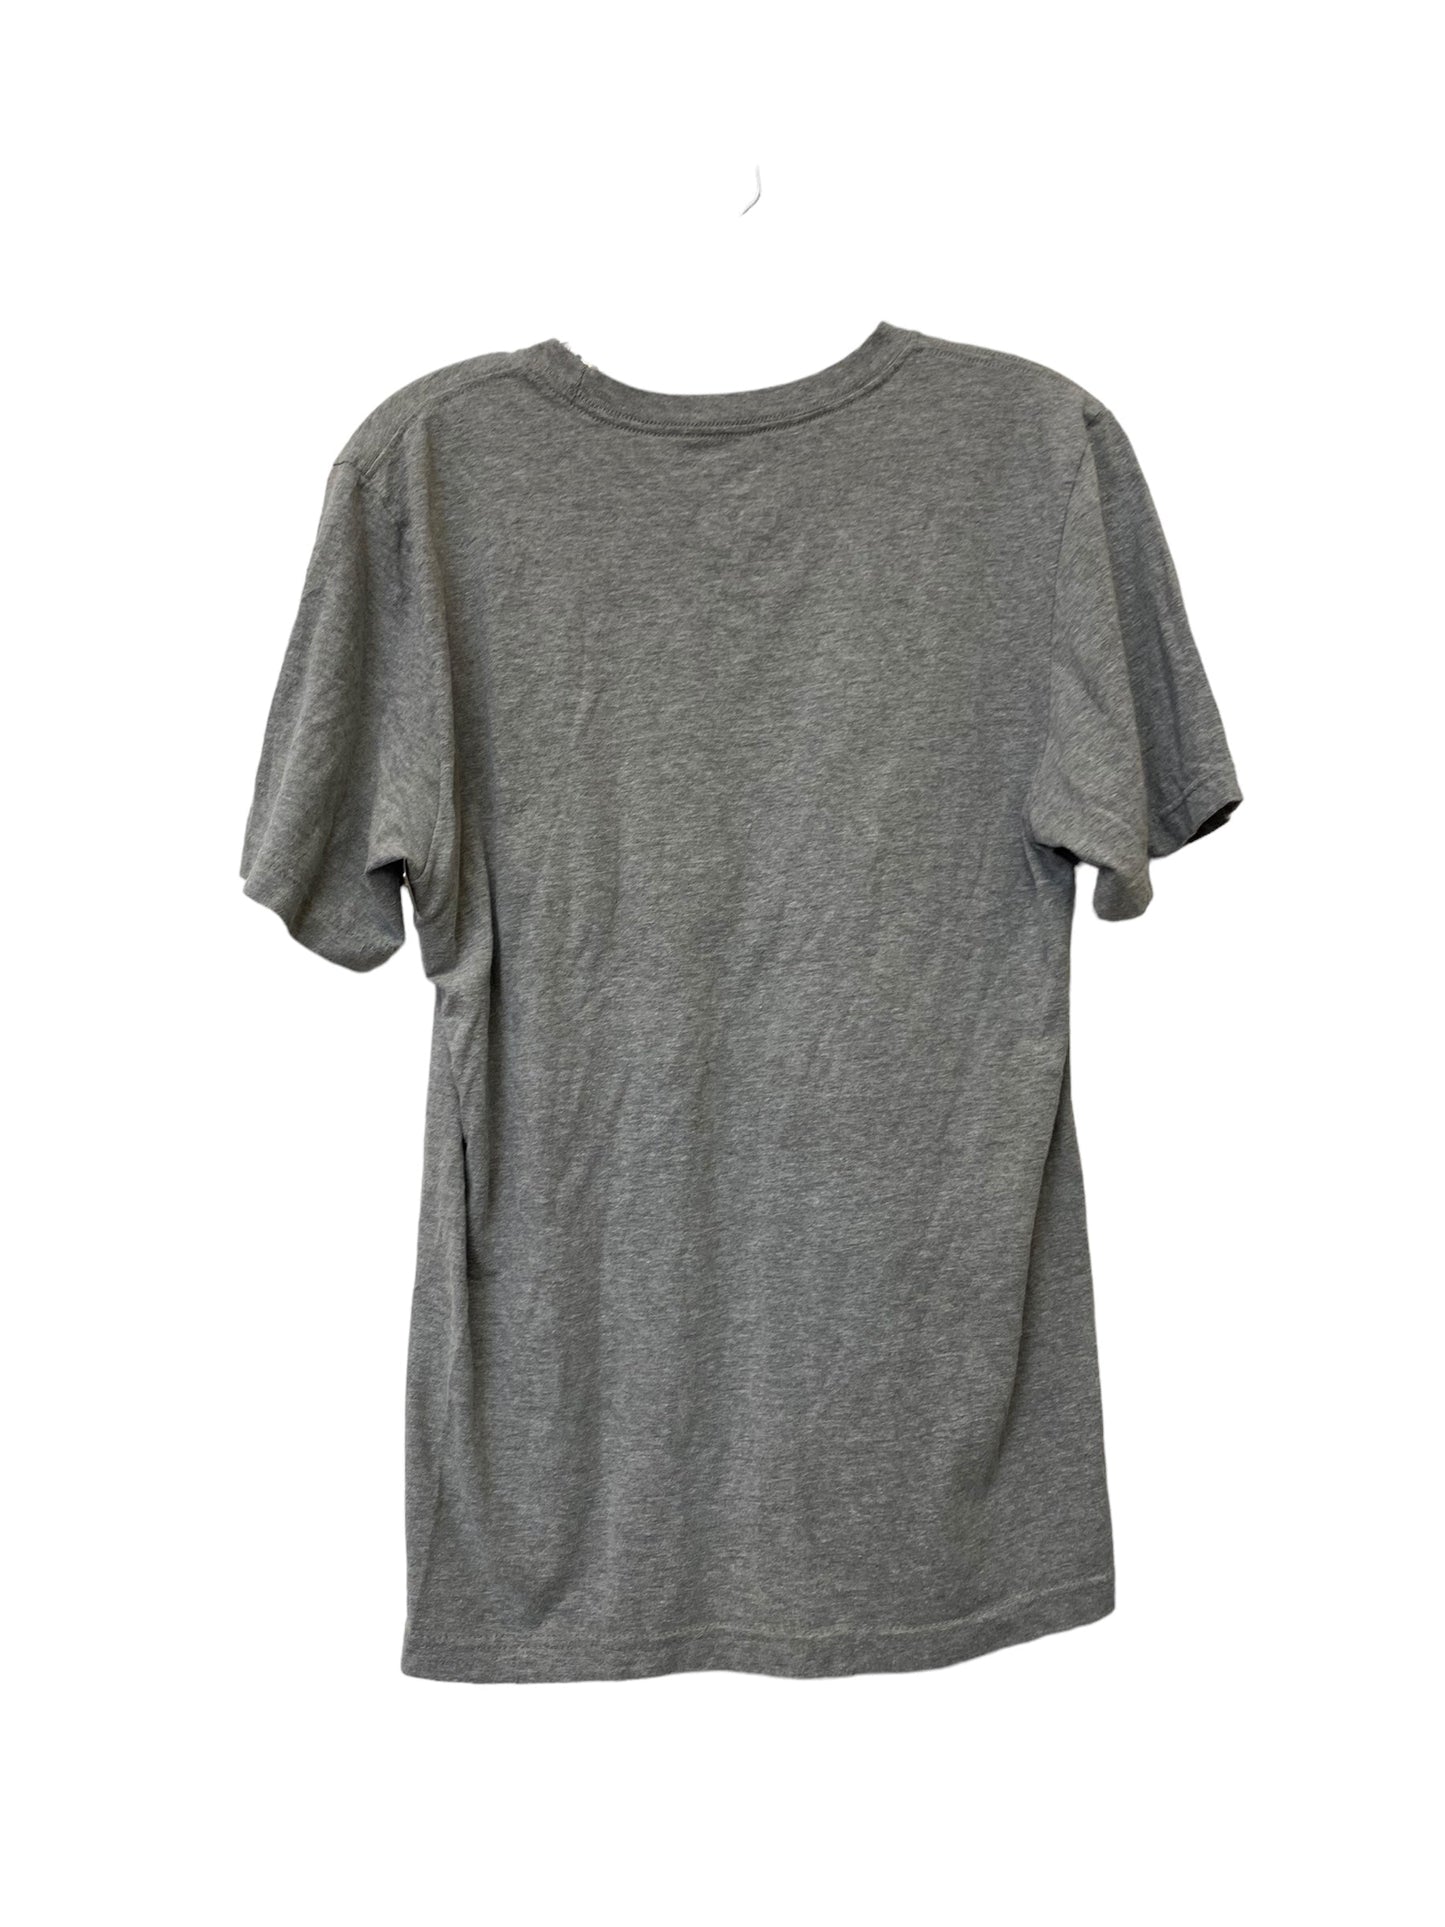 Grey Top Short Sleeve Nike Apparel, Size S